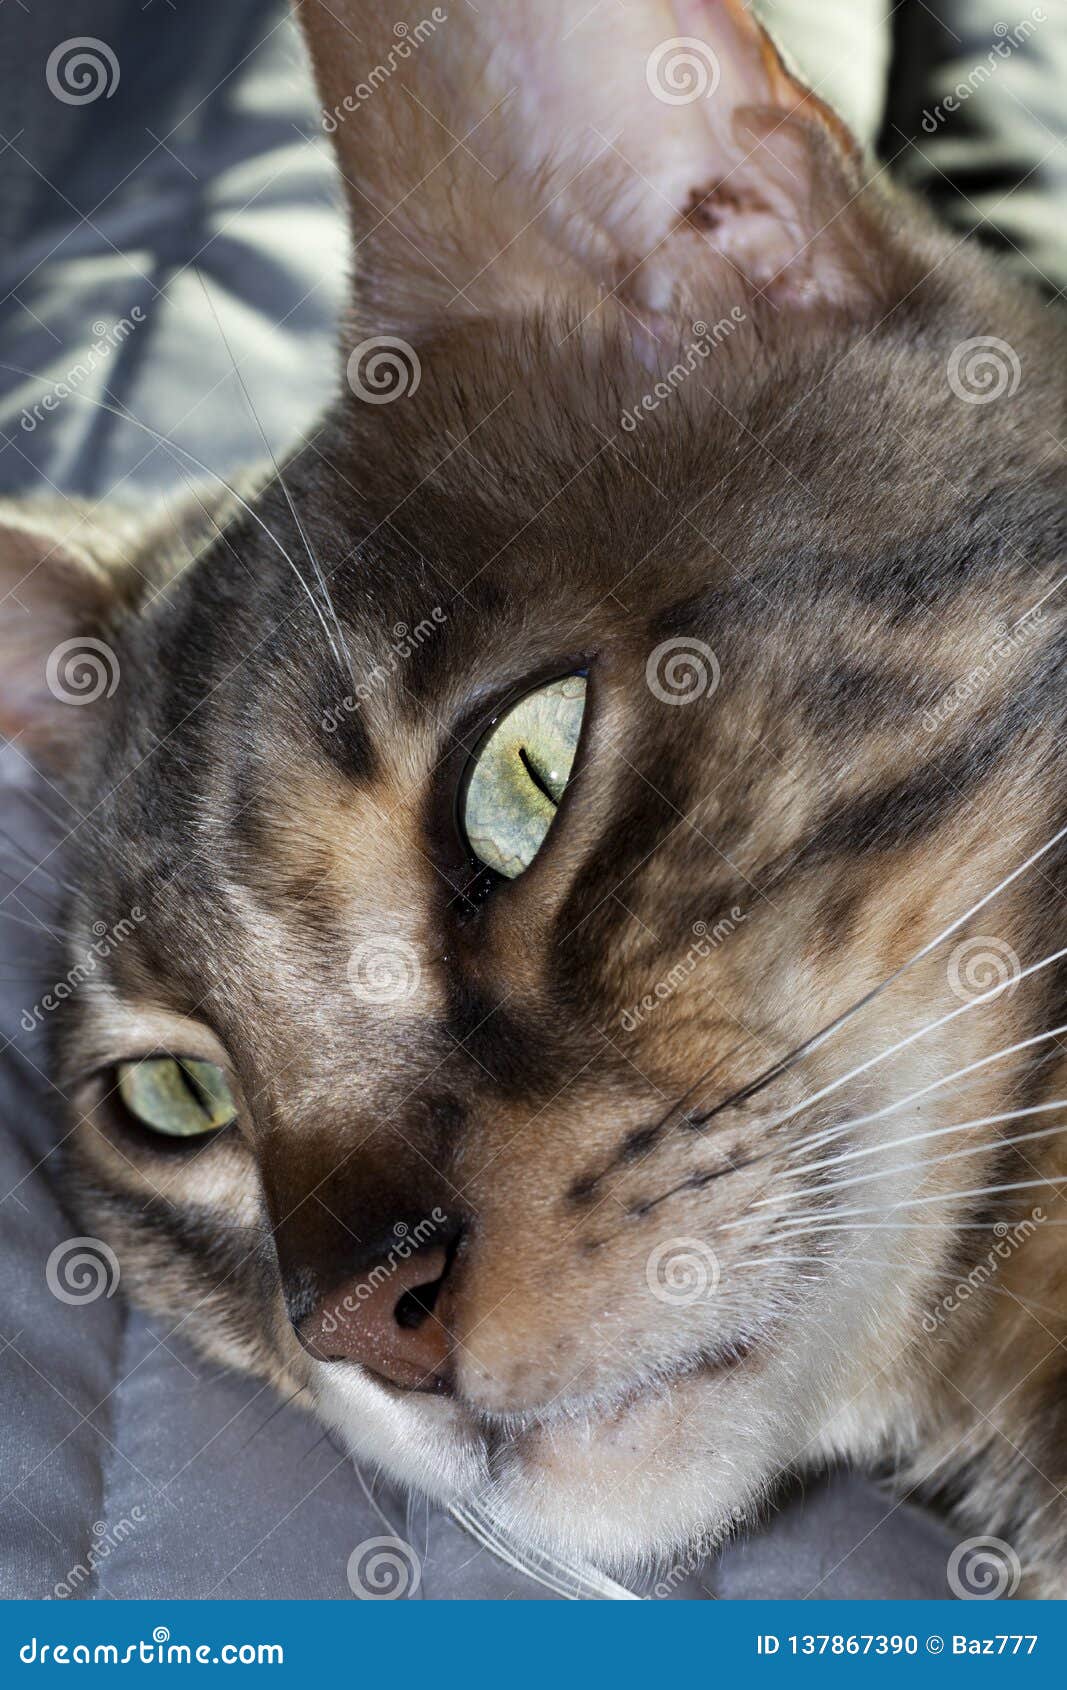 57 Top Images Blue Bengal Cat Scratcher - 1,629 Asian Blue Cat Photos - Free & Royalty-Free Stock ...